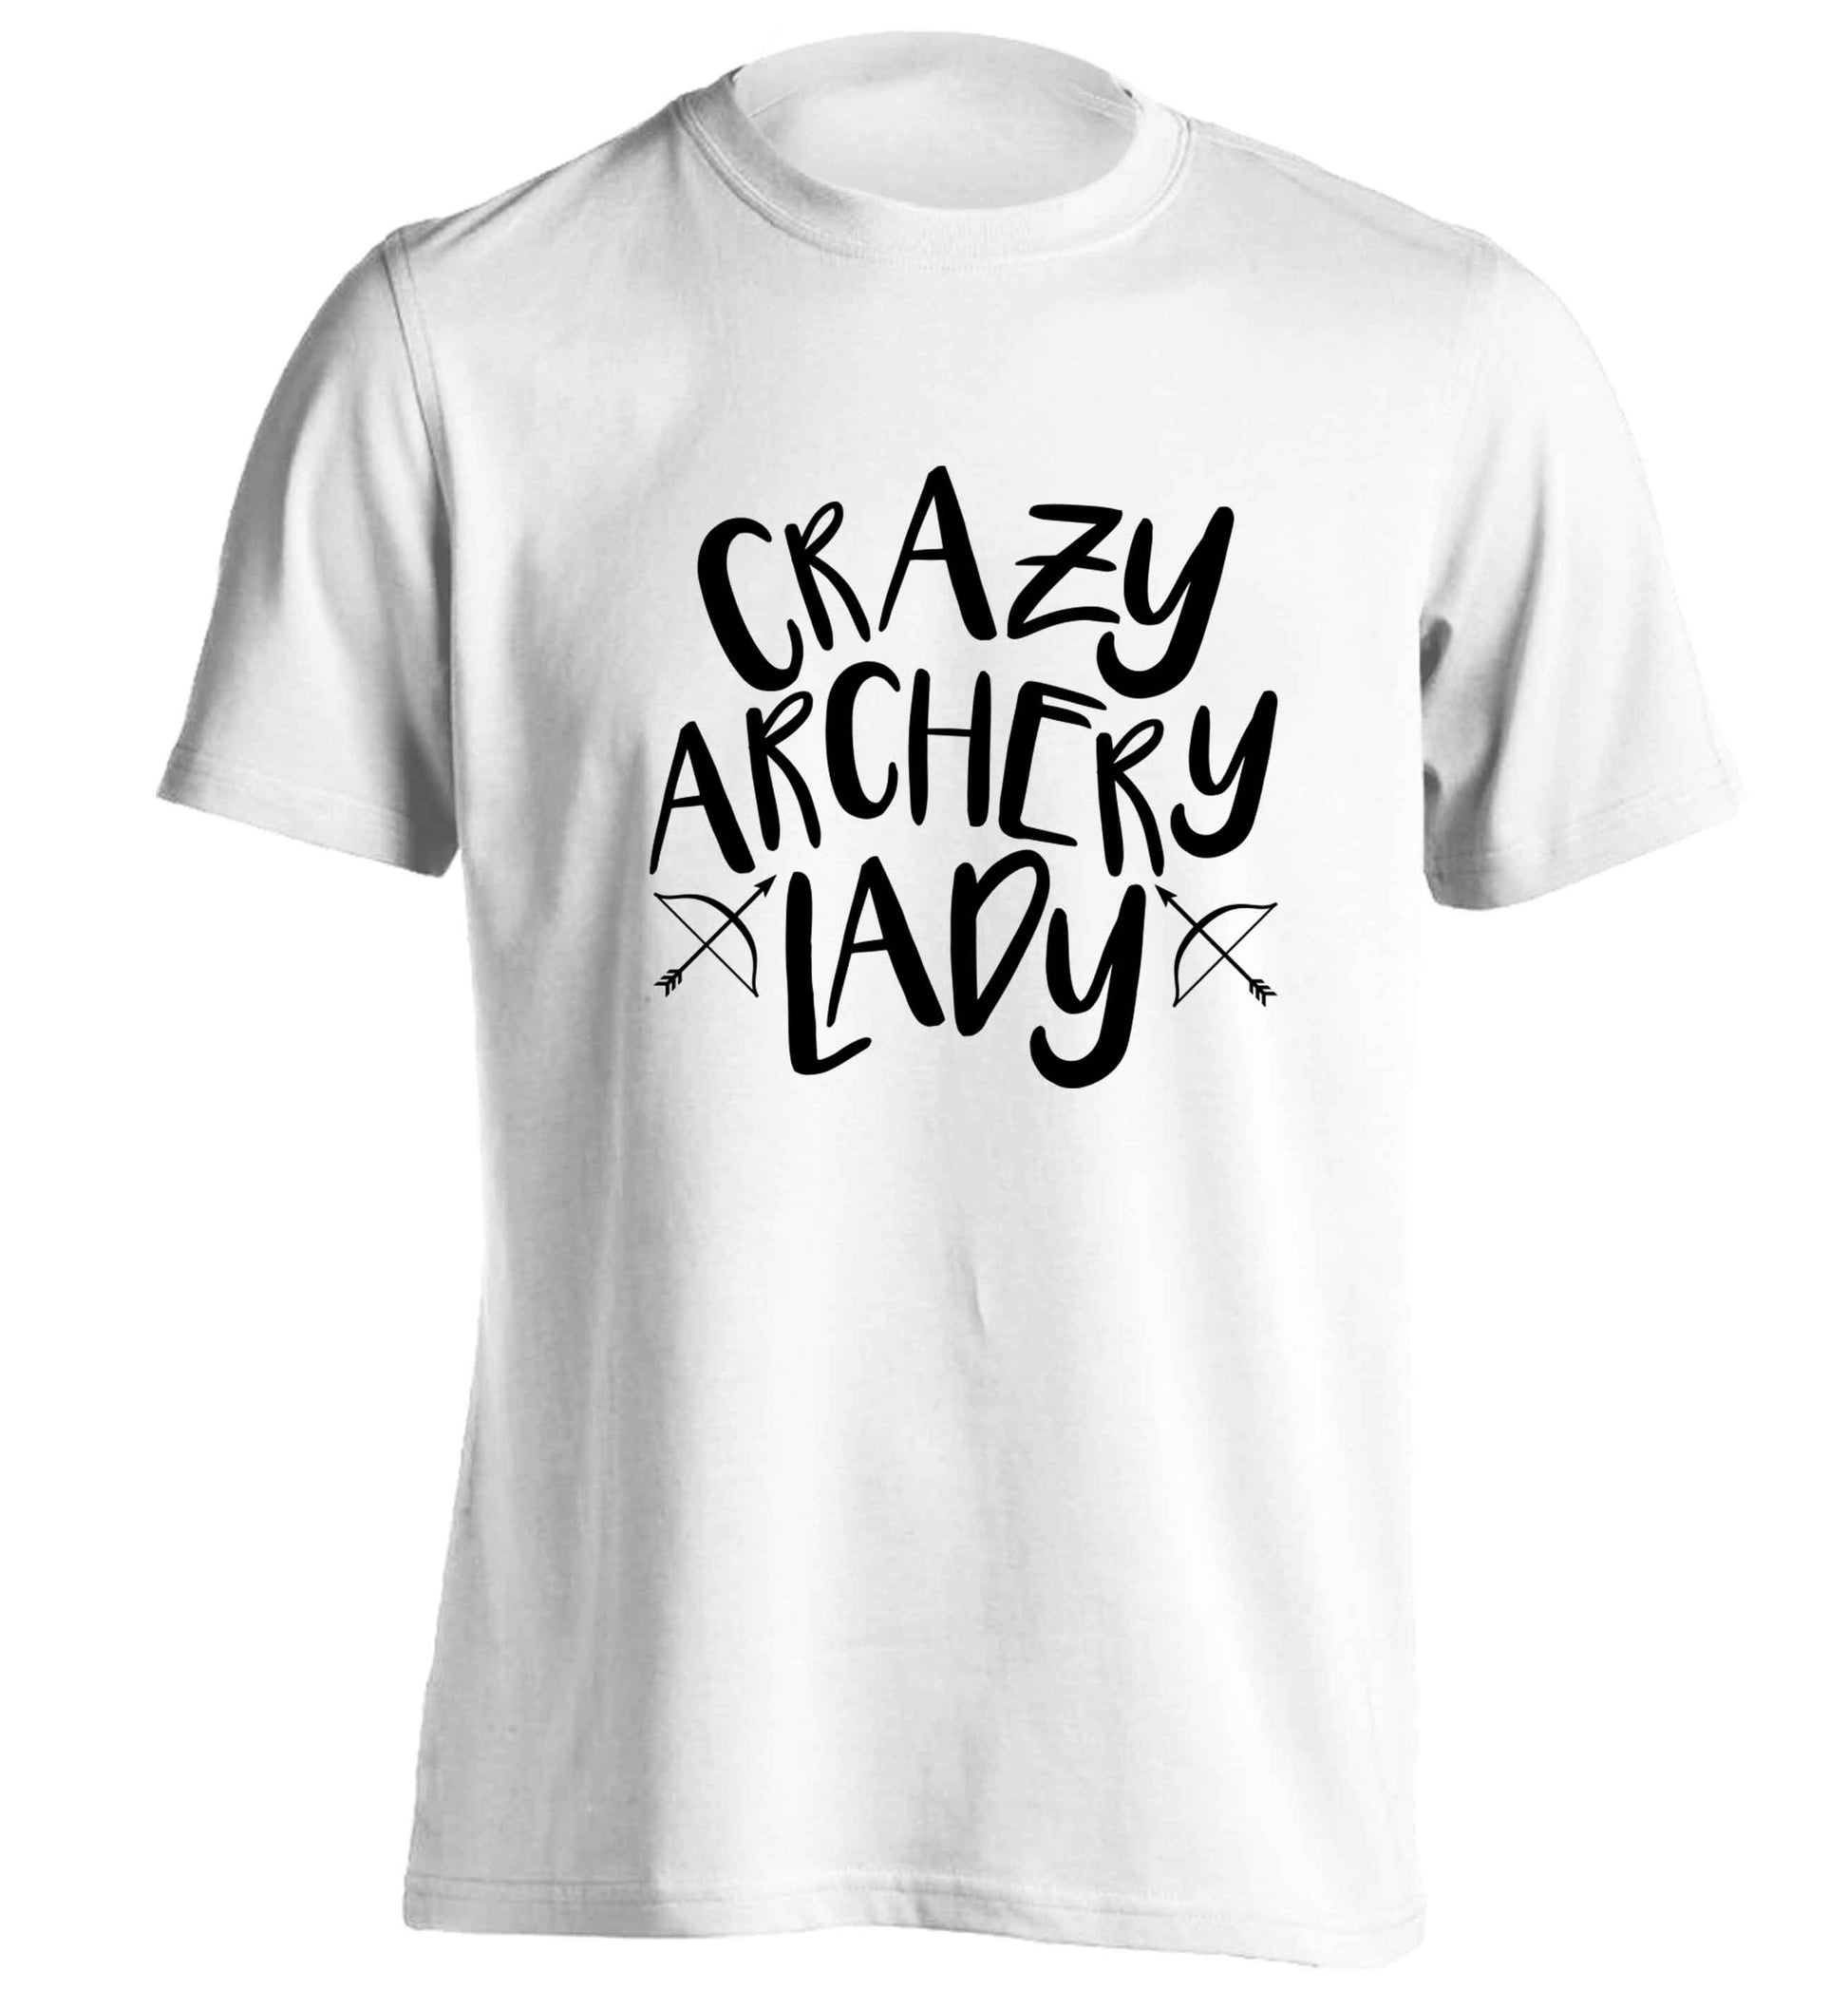 Crazy archery lady adults unisex white Tshirt 2XL